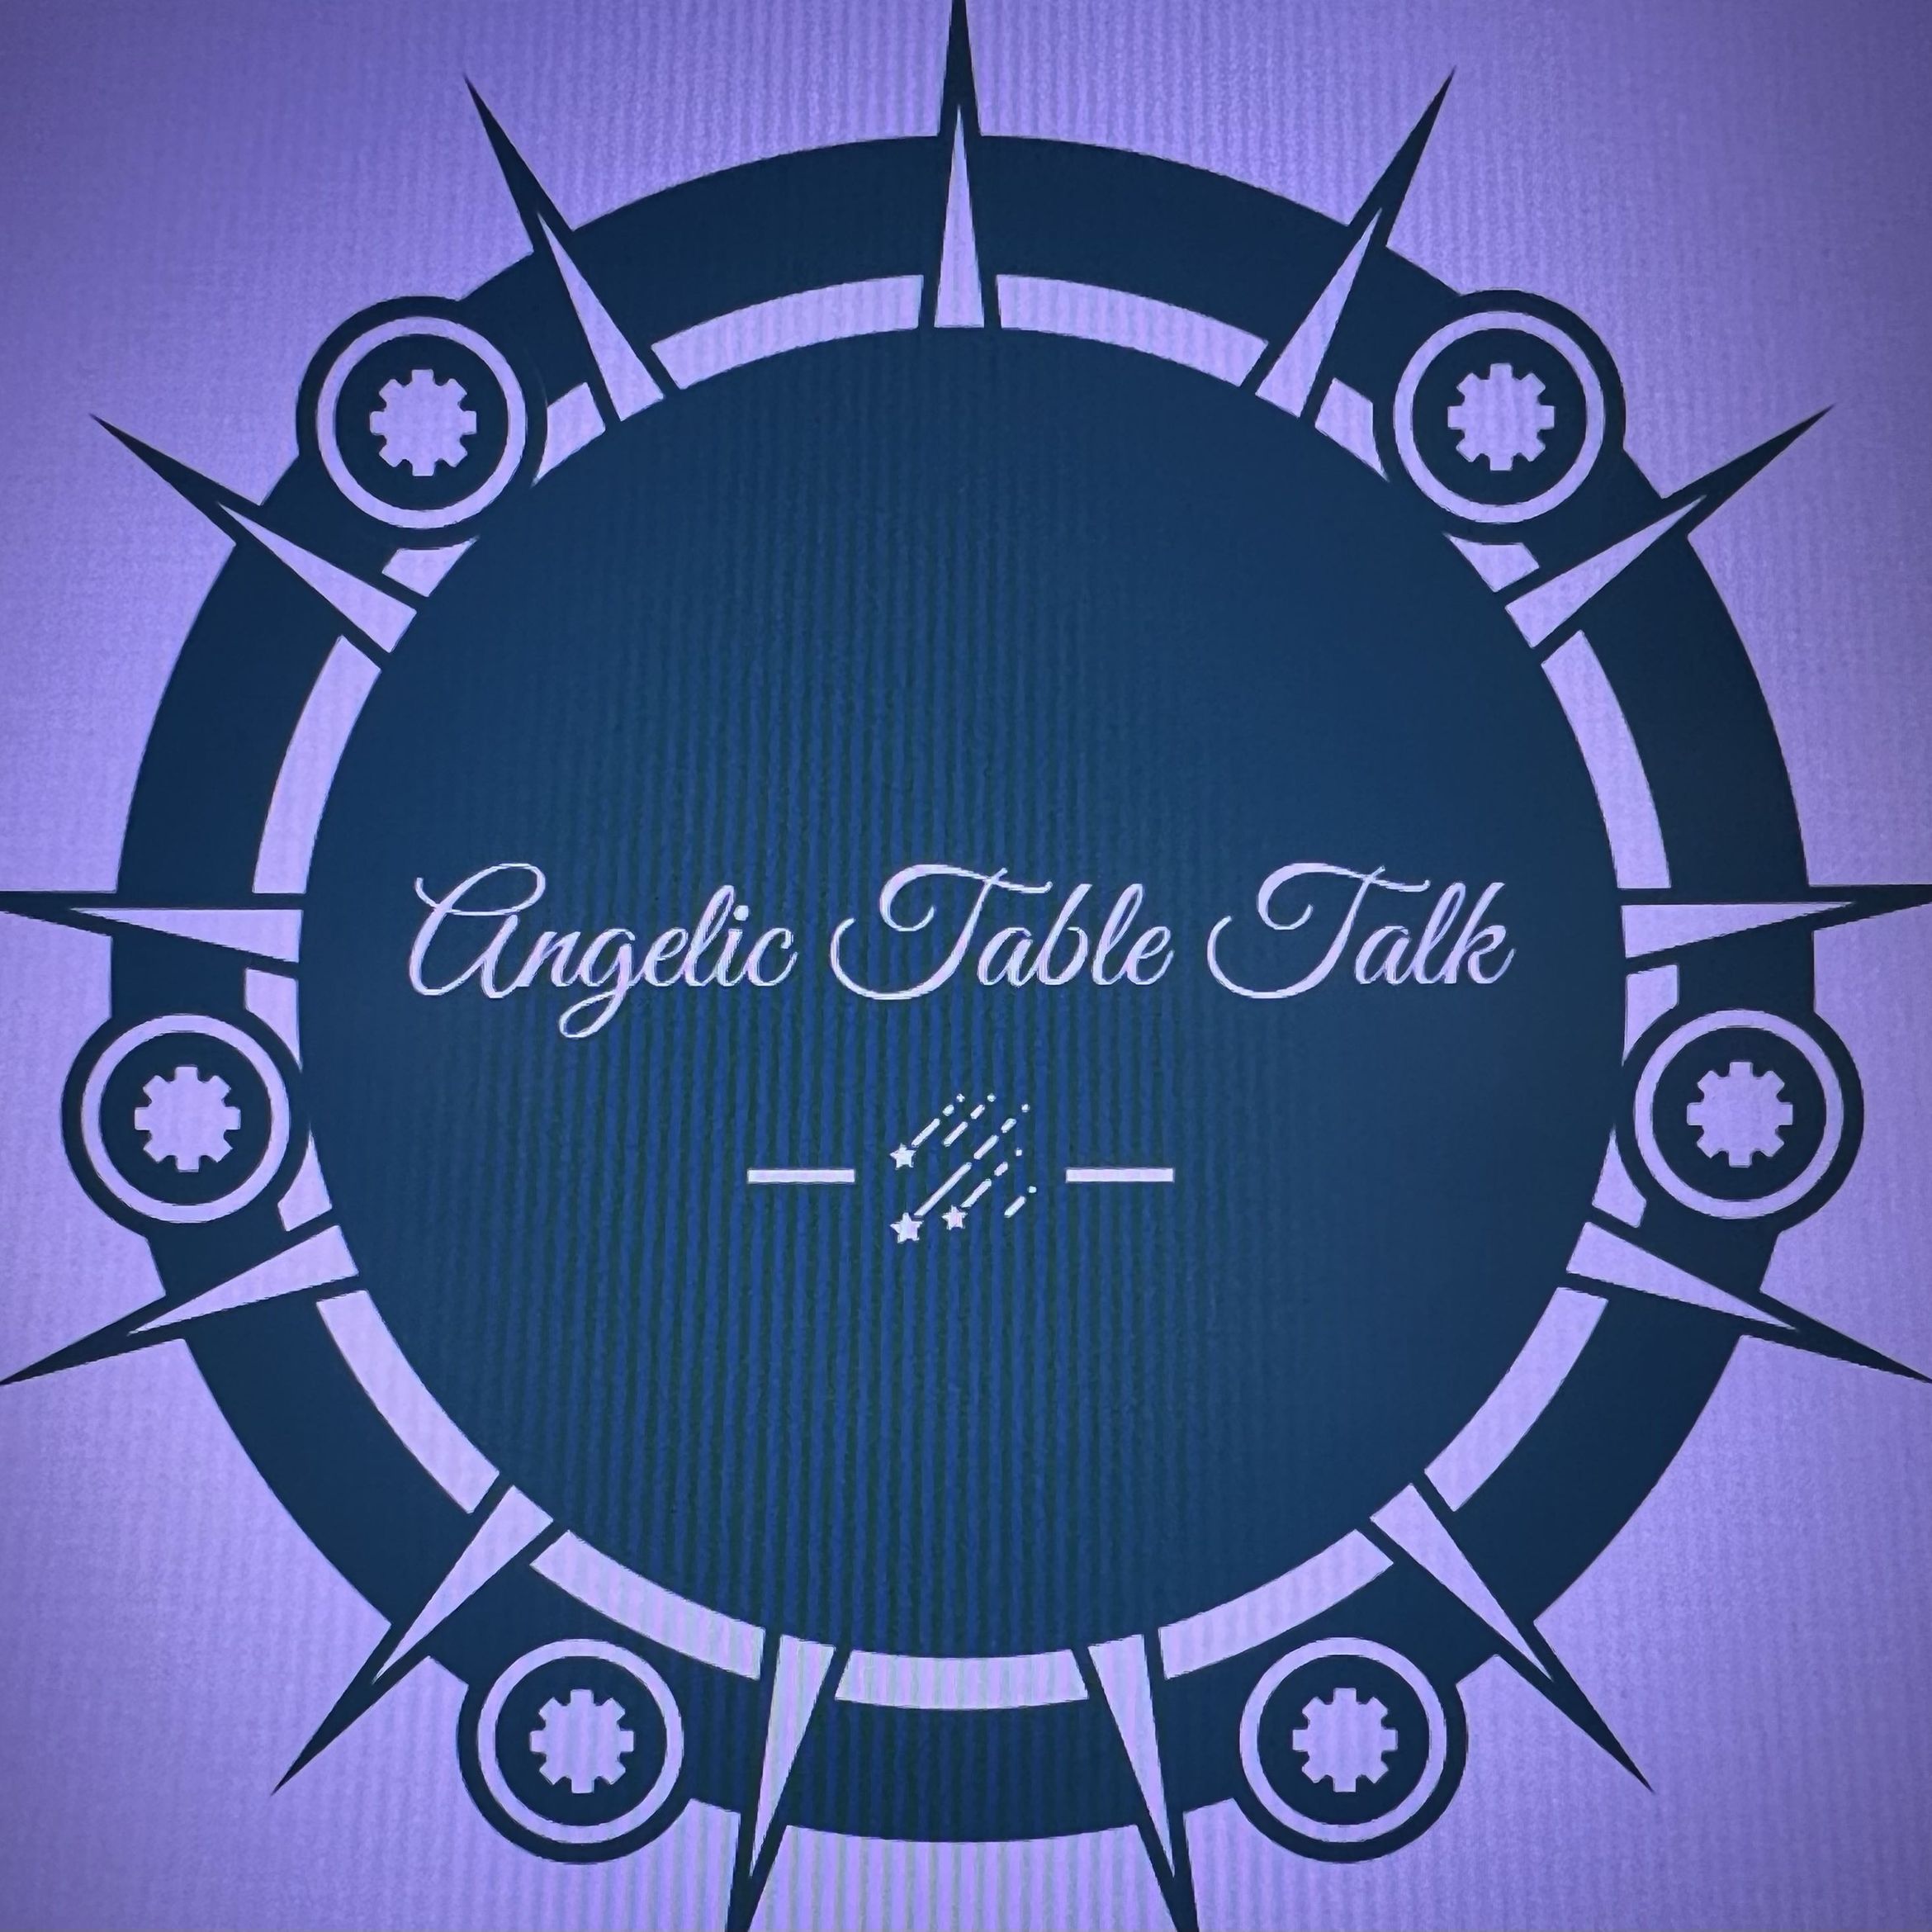 Angelic Table Talk, 1100 New River Dr, Radford, 24141